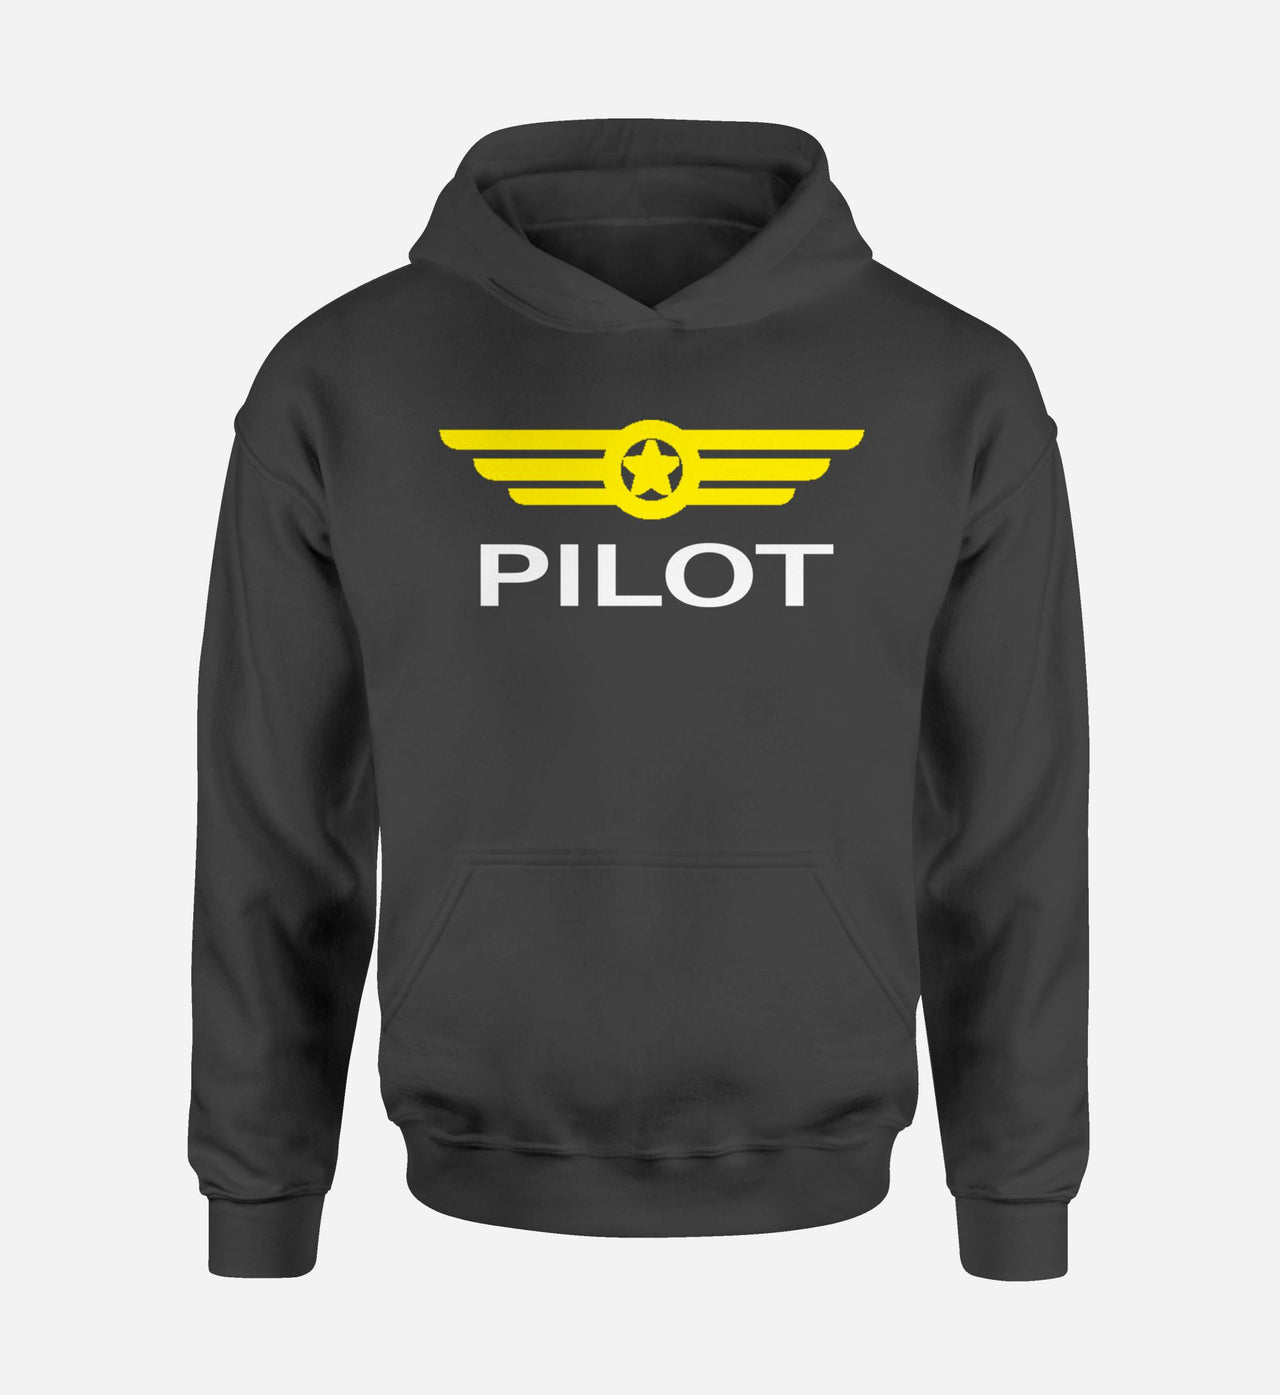 Pilot & Badge Designed Hoodies